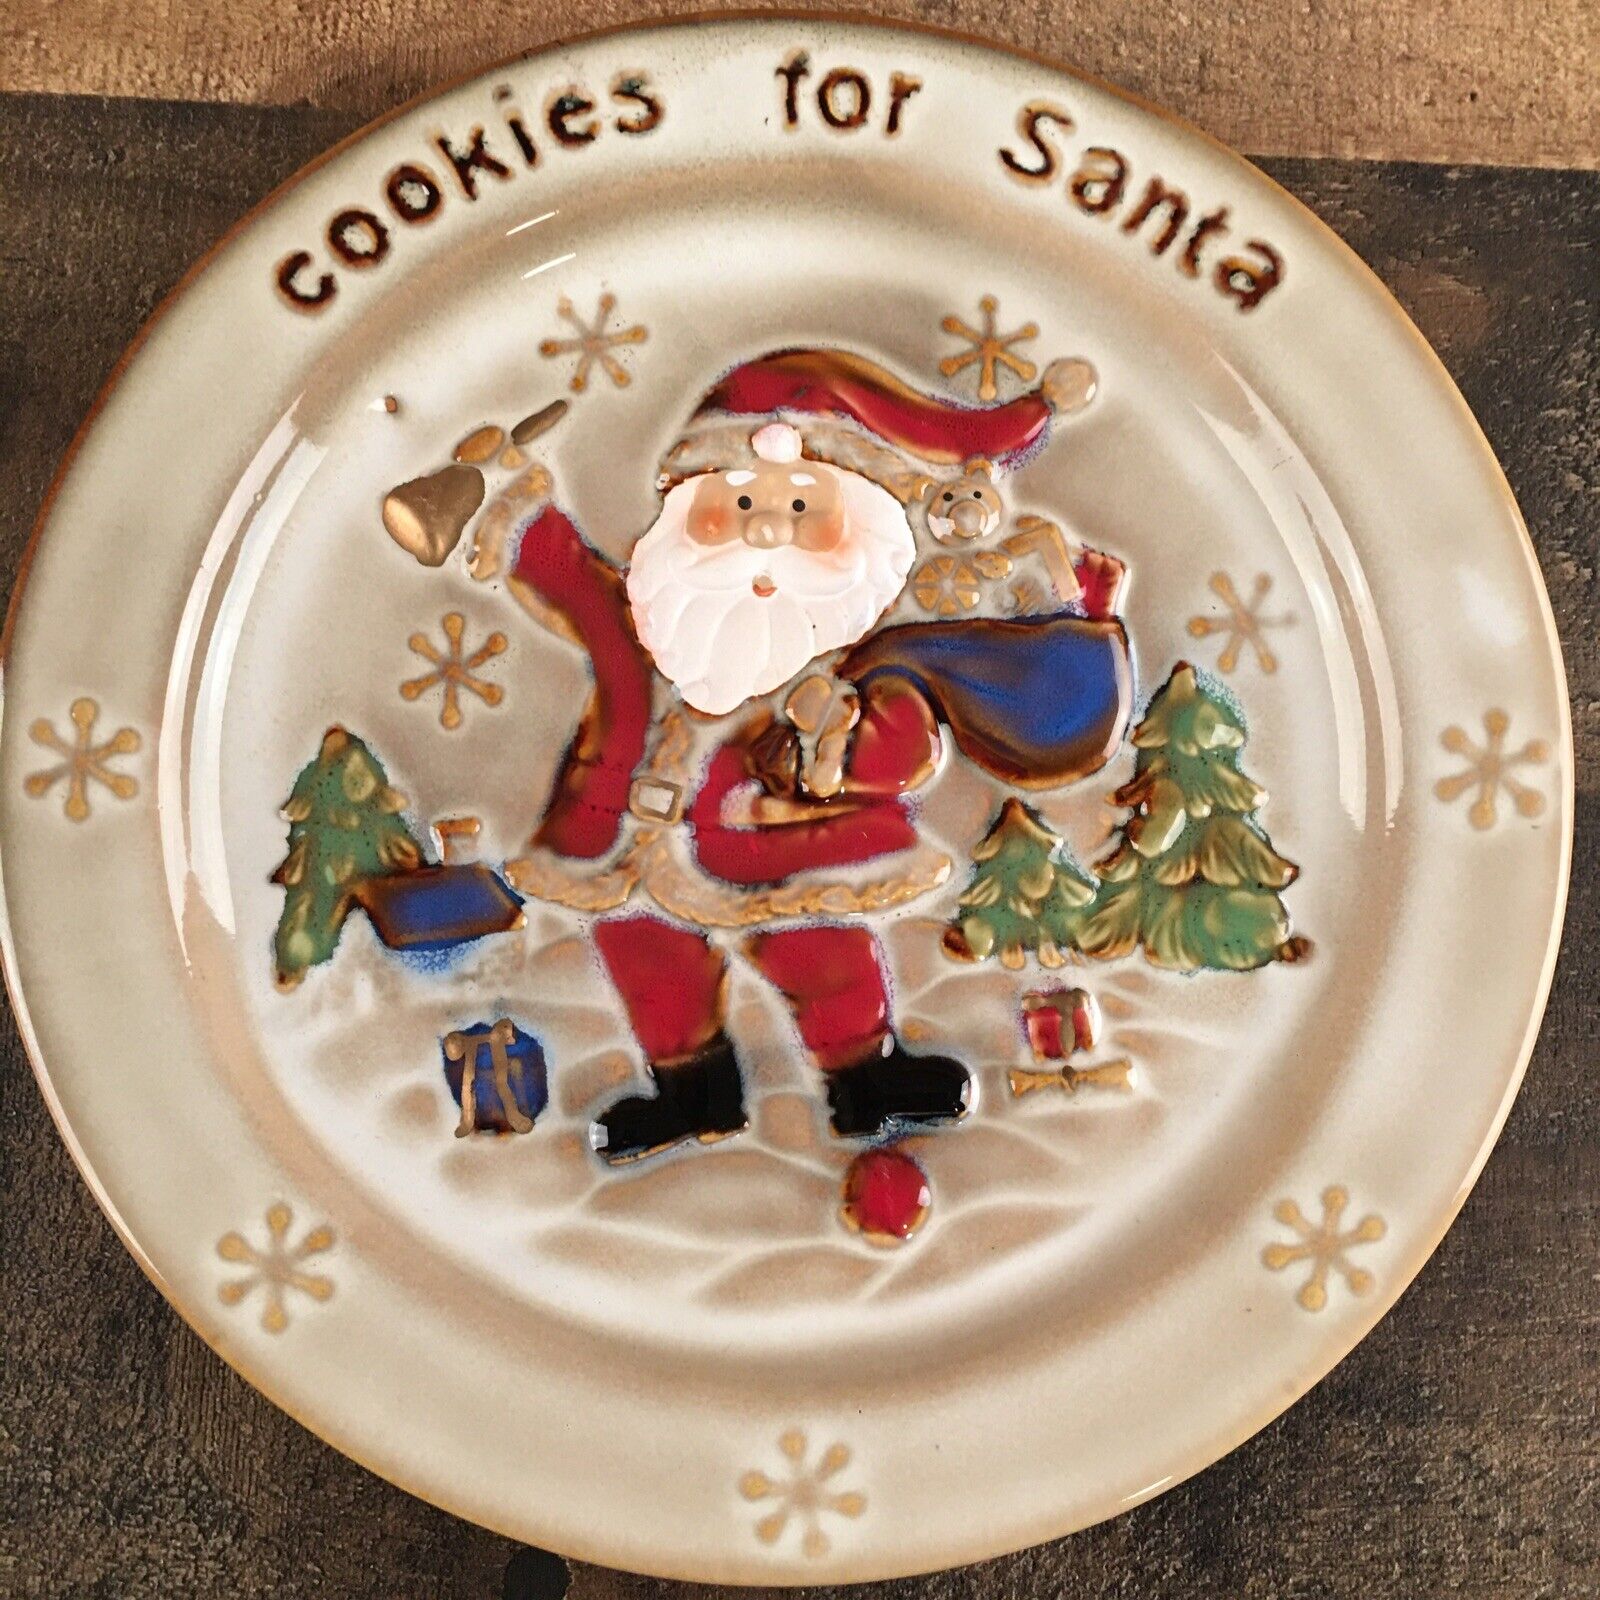 Vintage Cookies for Santa Plate Christmas Dish Santa Claus Detailed Rich Colors